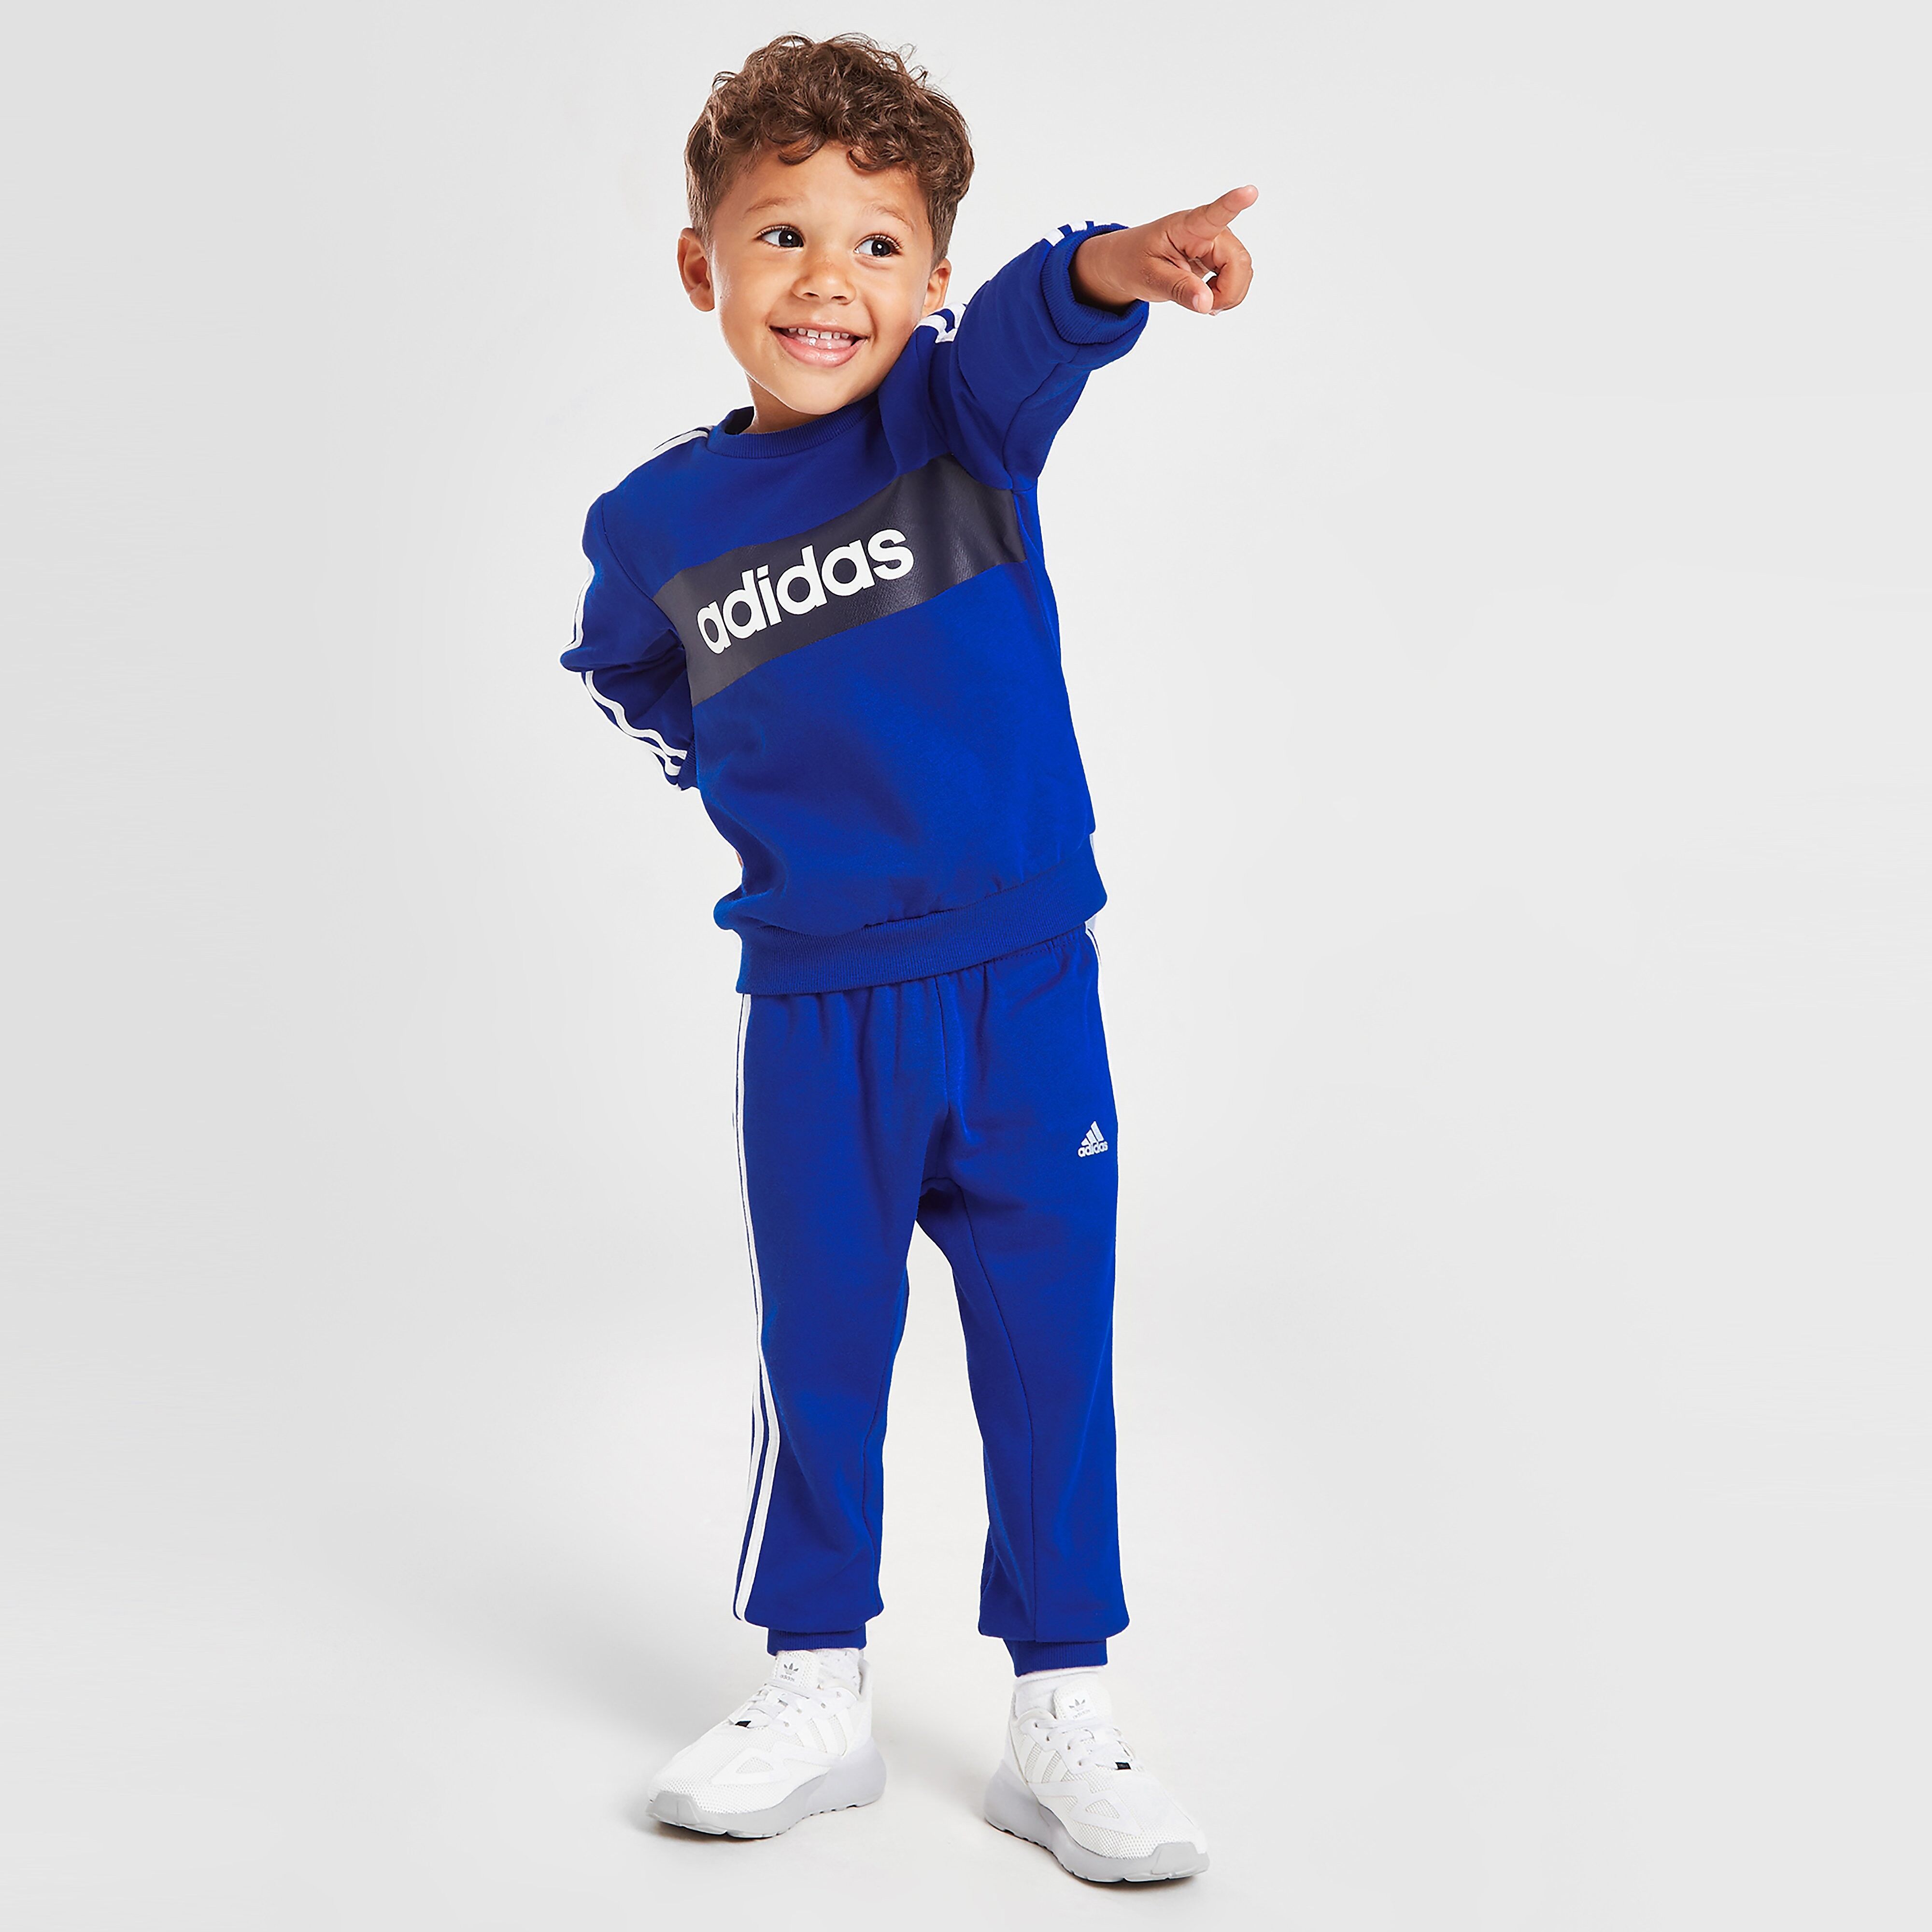 adidas Inf B Crew Set Bos Nvy/wht/blu $ - Blue - Kids  size: 9-12M